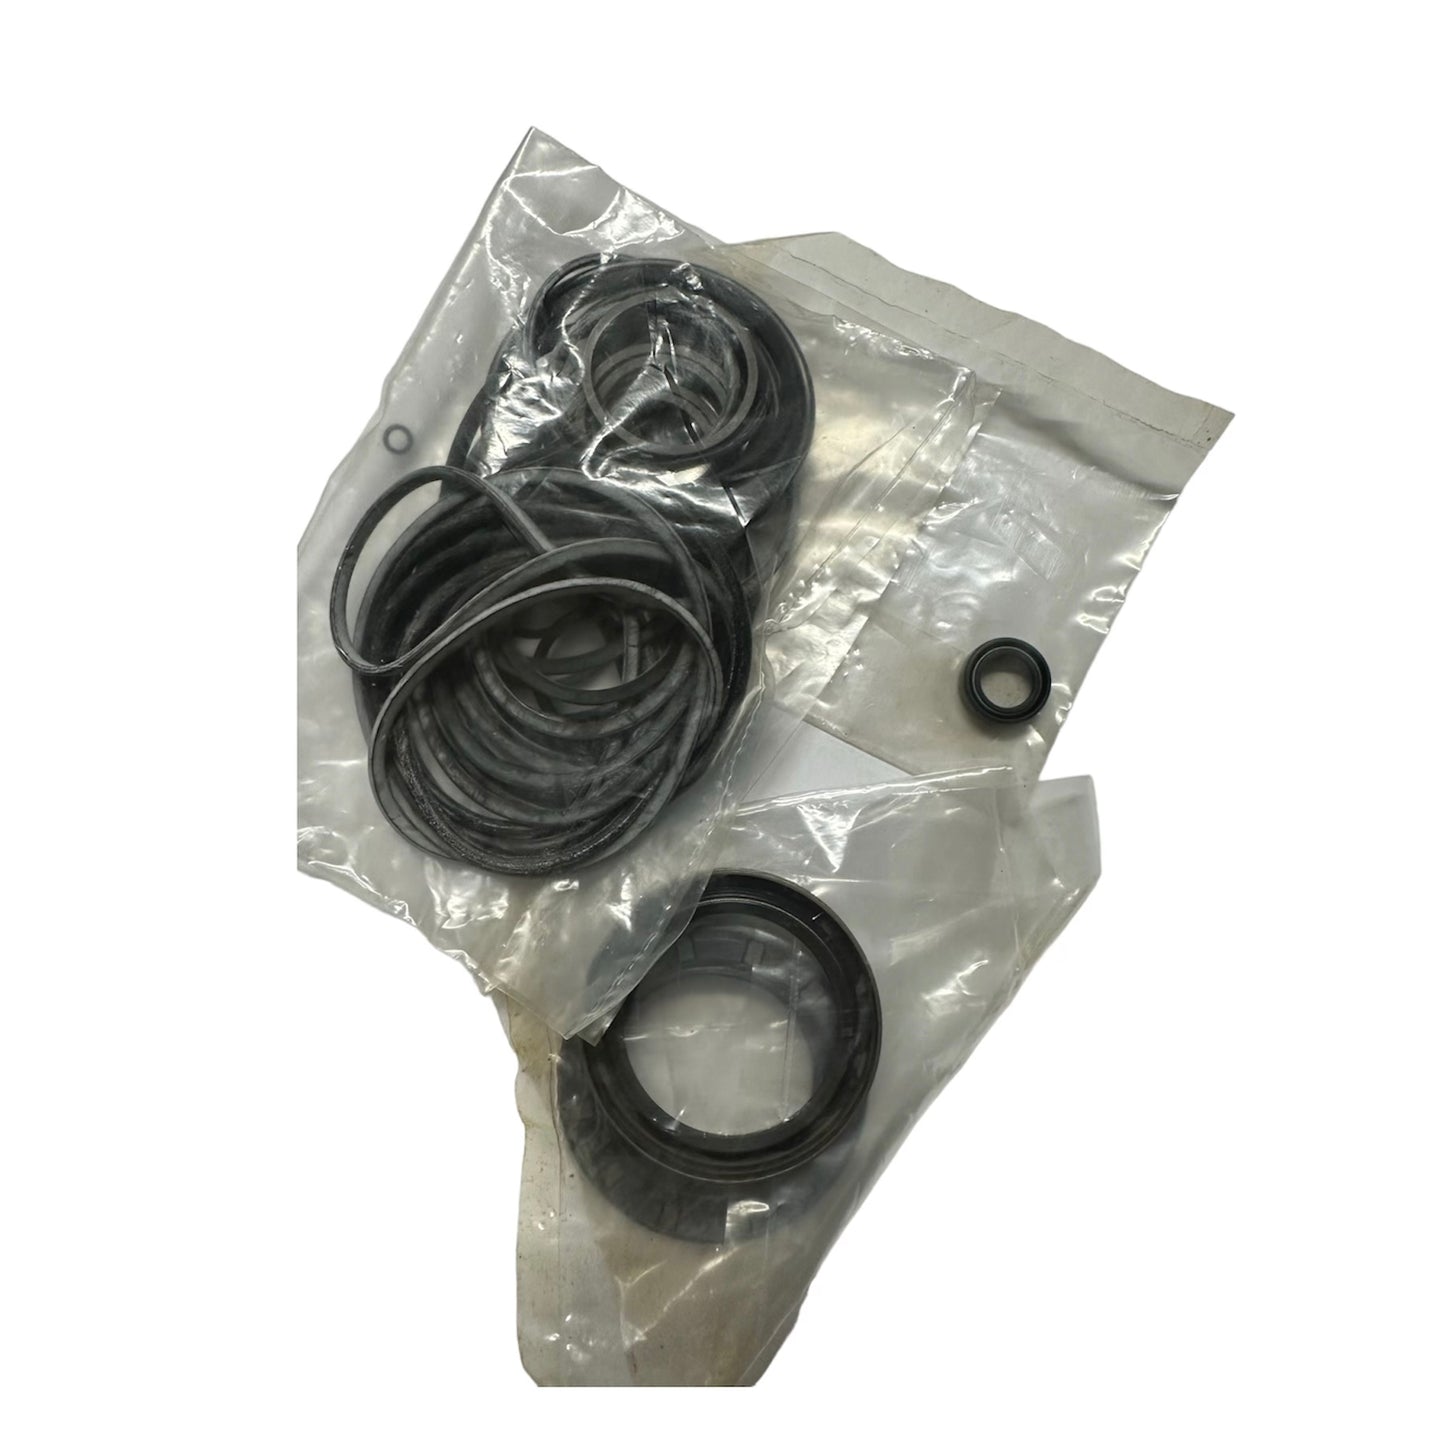 Seal Gasket Box Kit Including O-rings - JLM20480